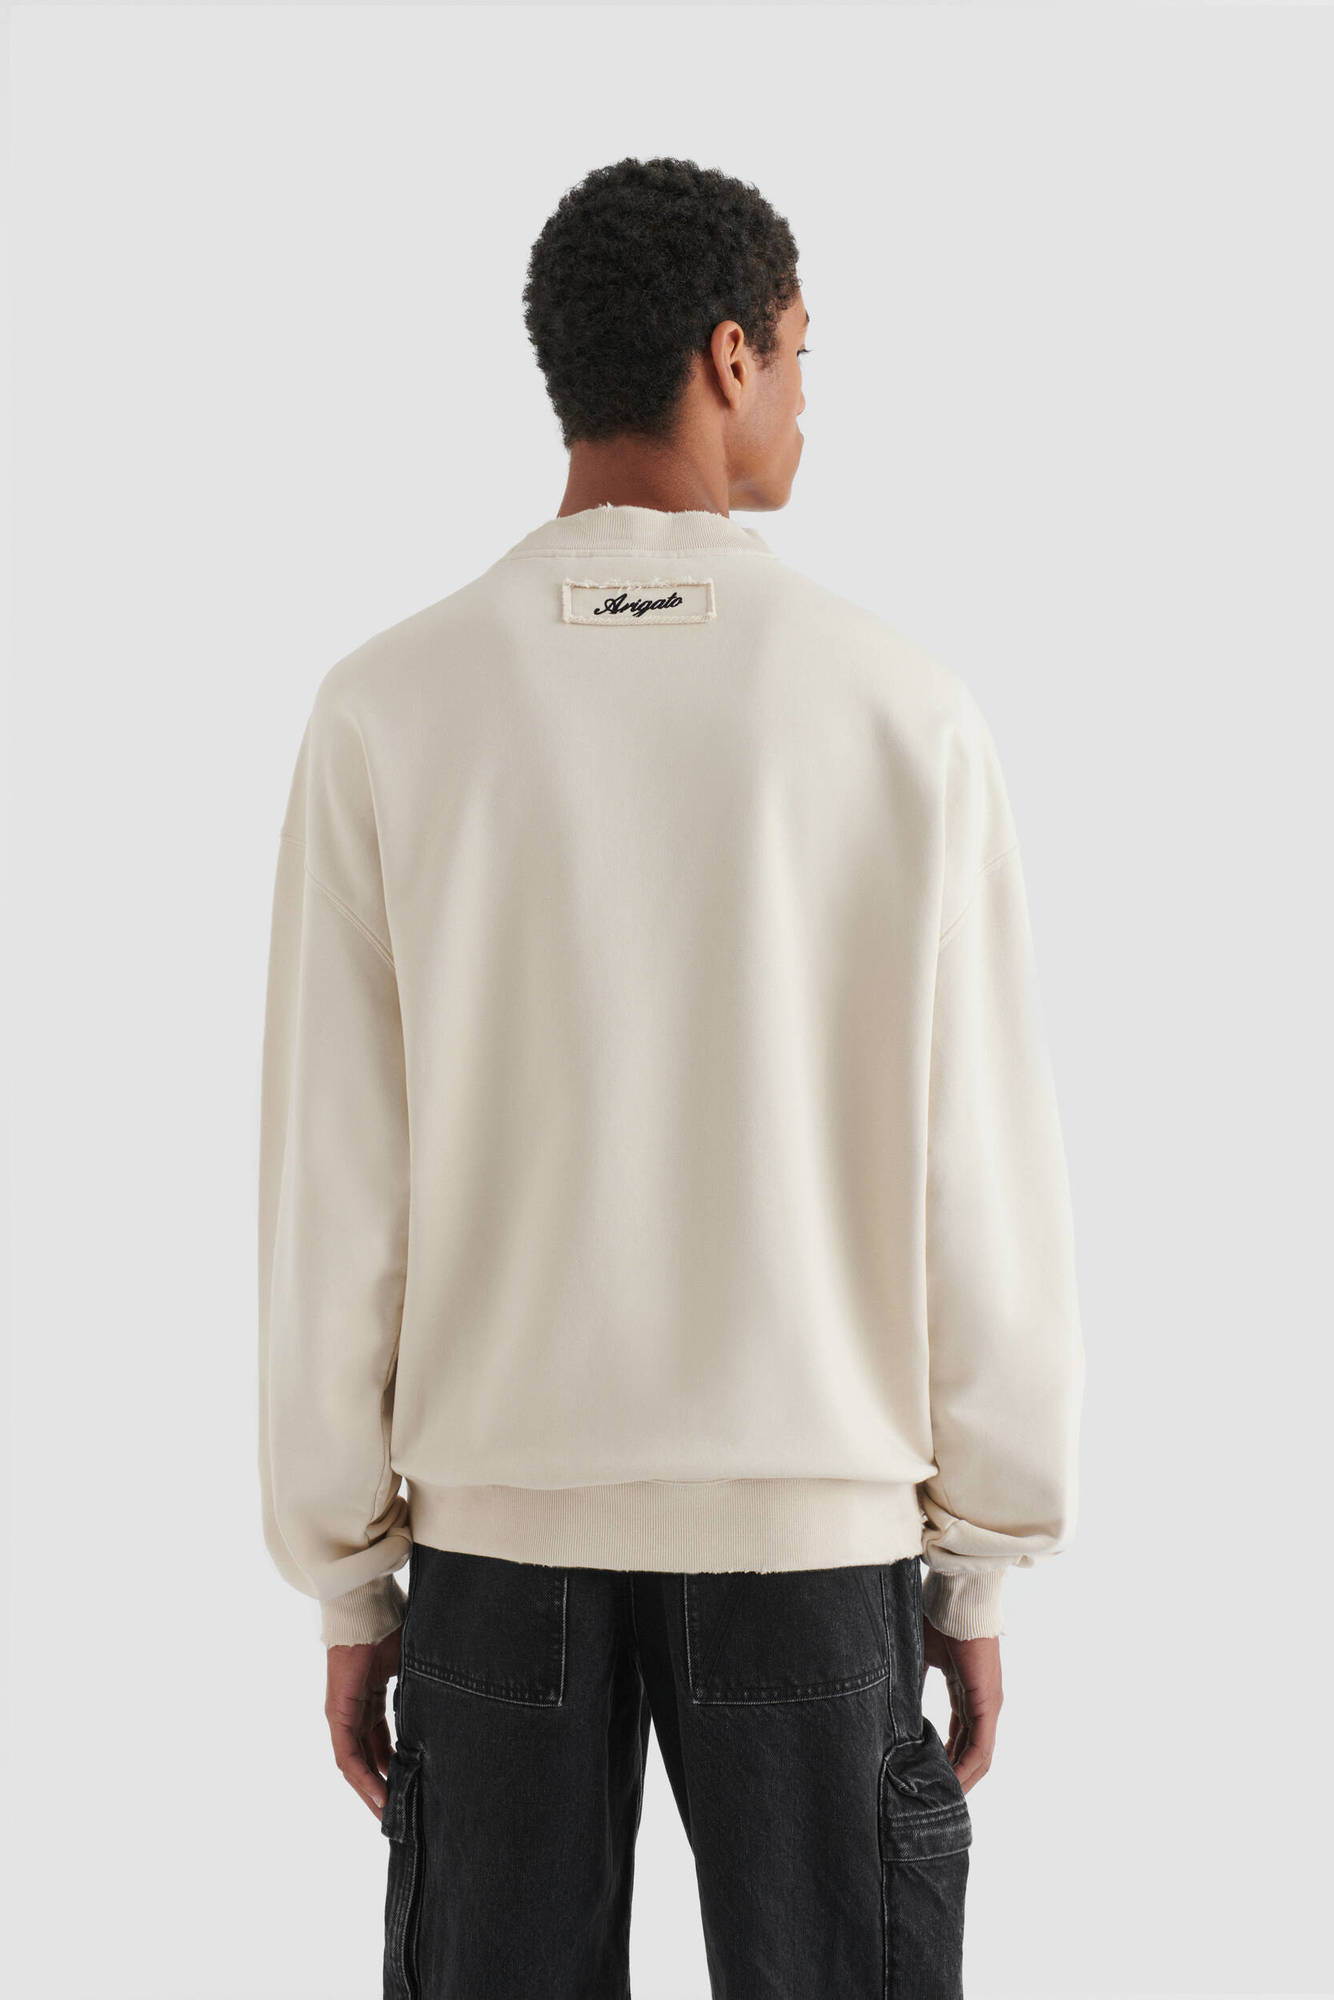 AXEL ARIGATO Vista Distressed Sweatshirt in Beige L